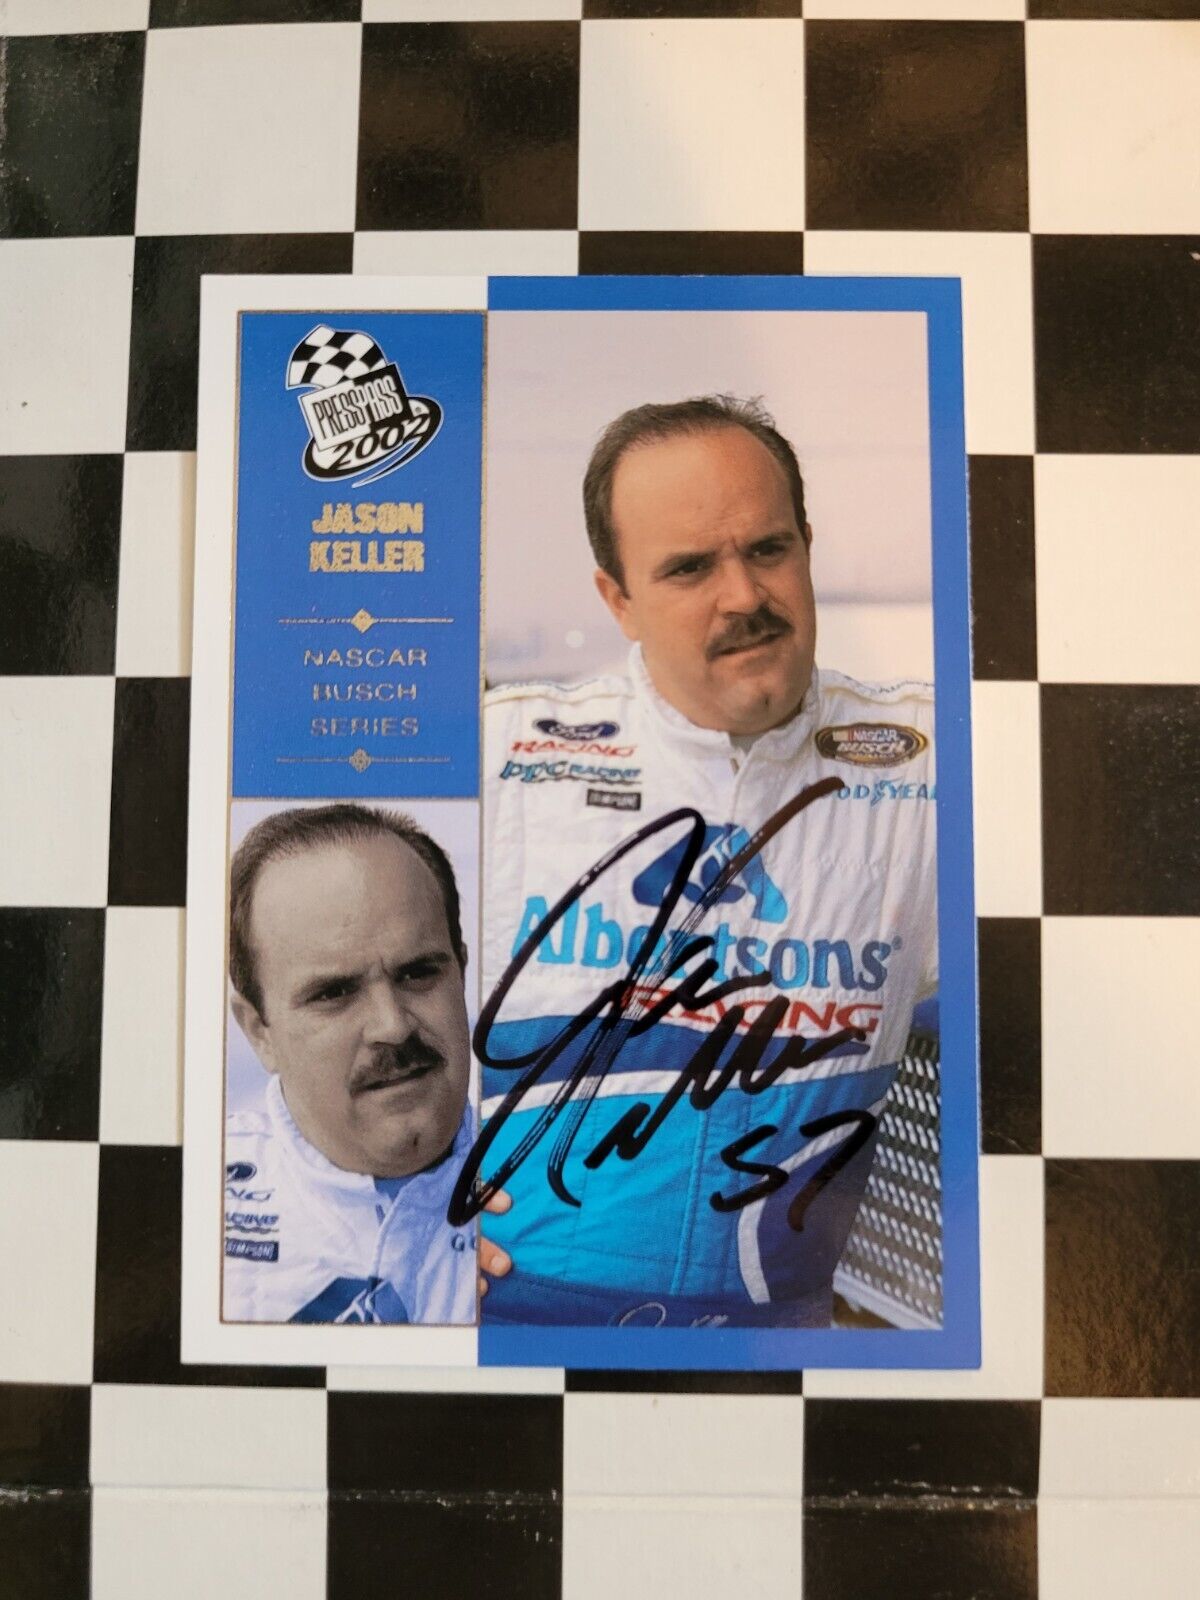 🏁🏆Jason Keller Autographed NASCAR Card 🏁🏆